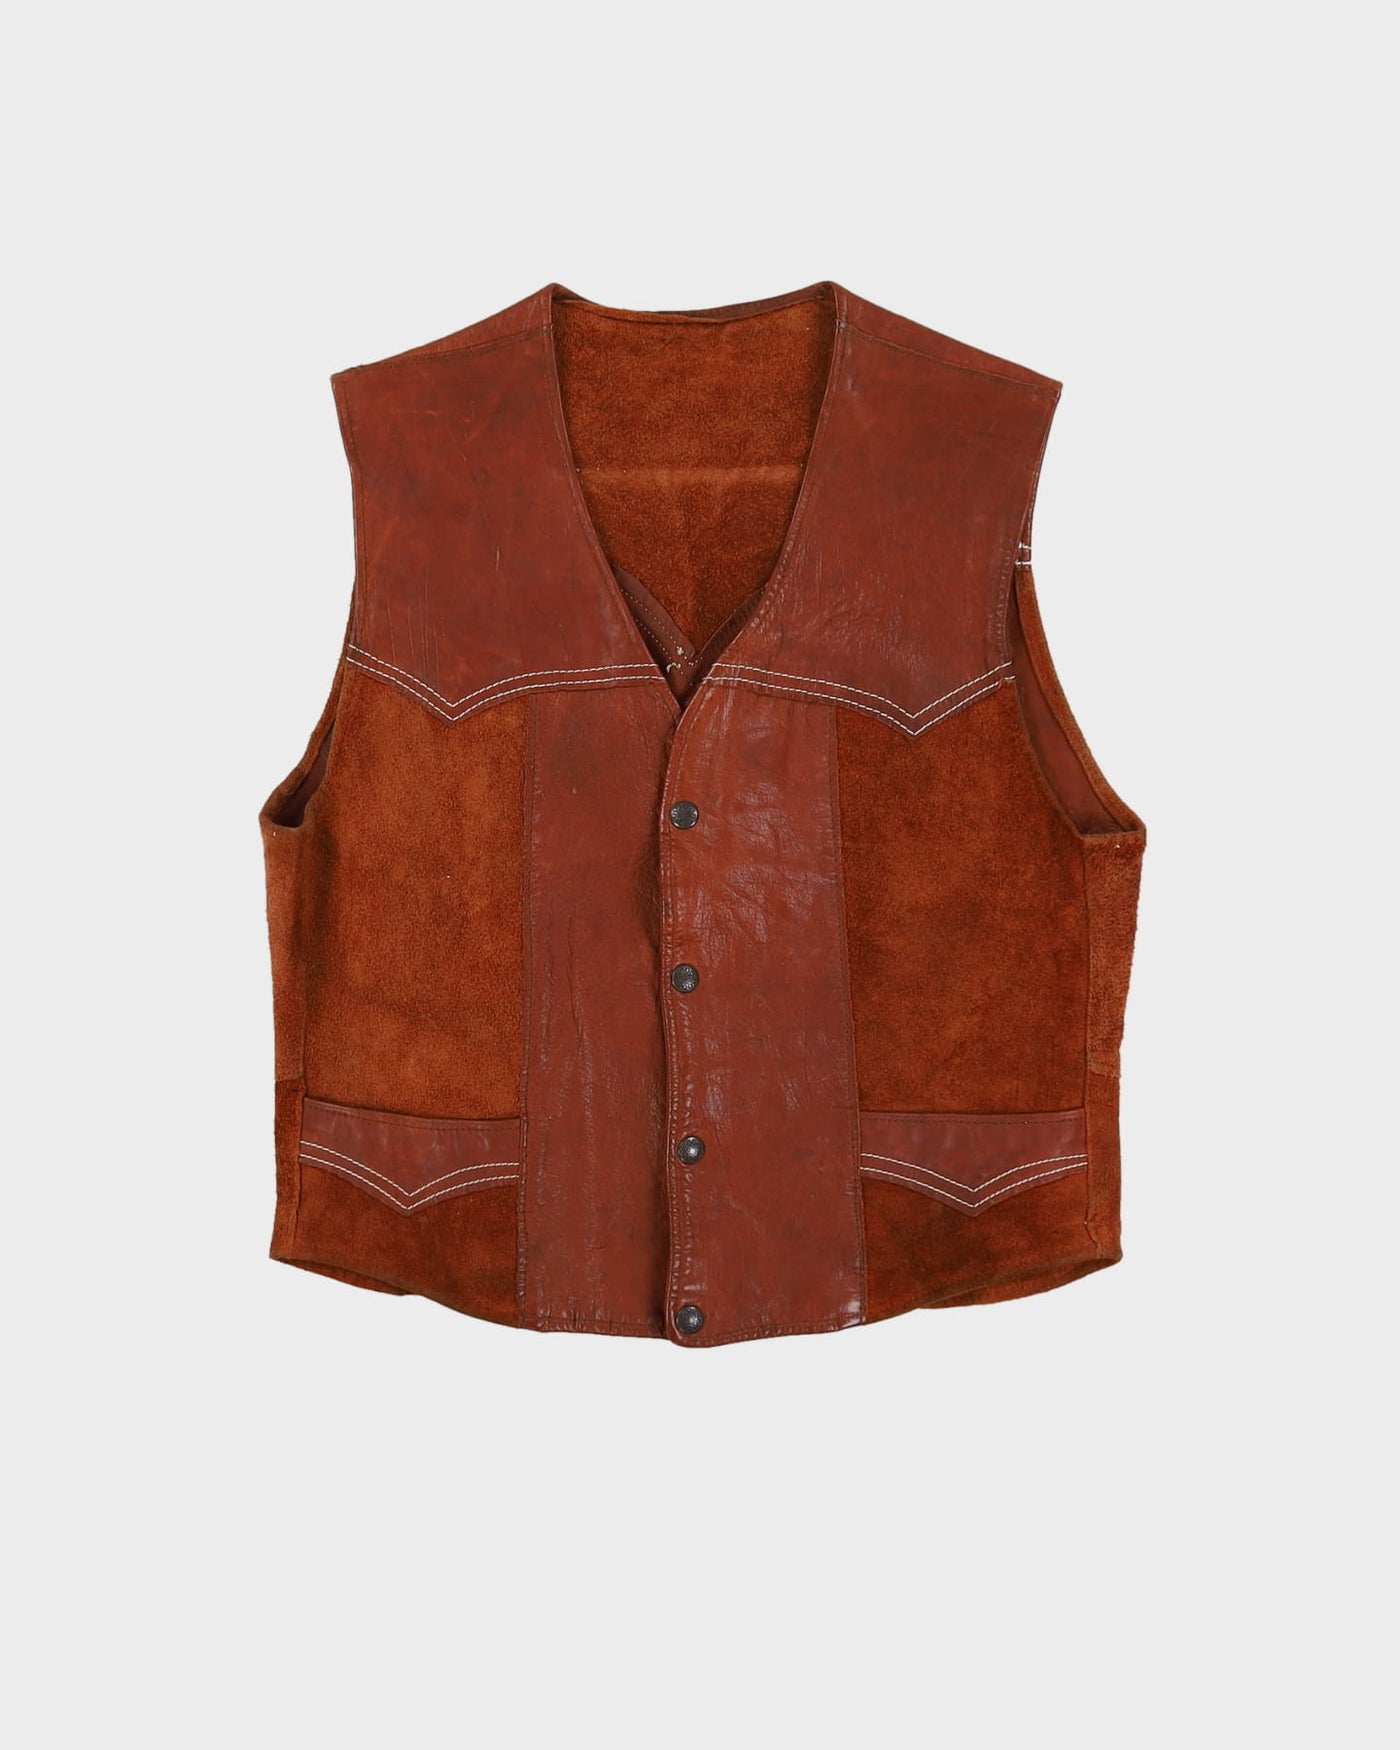 Vintage 1970s Western Leather Suede Waistcoat - M